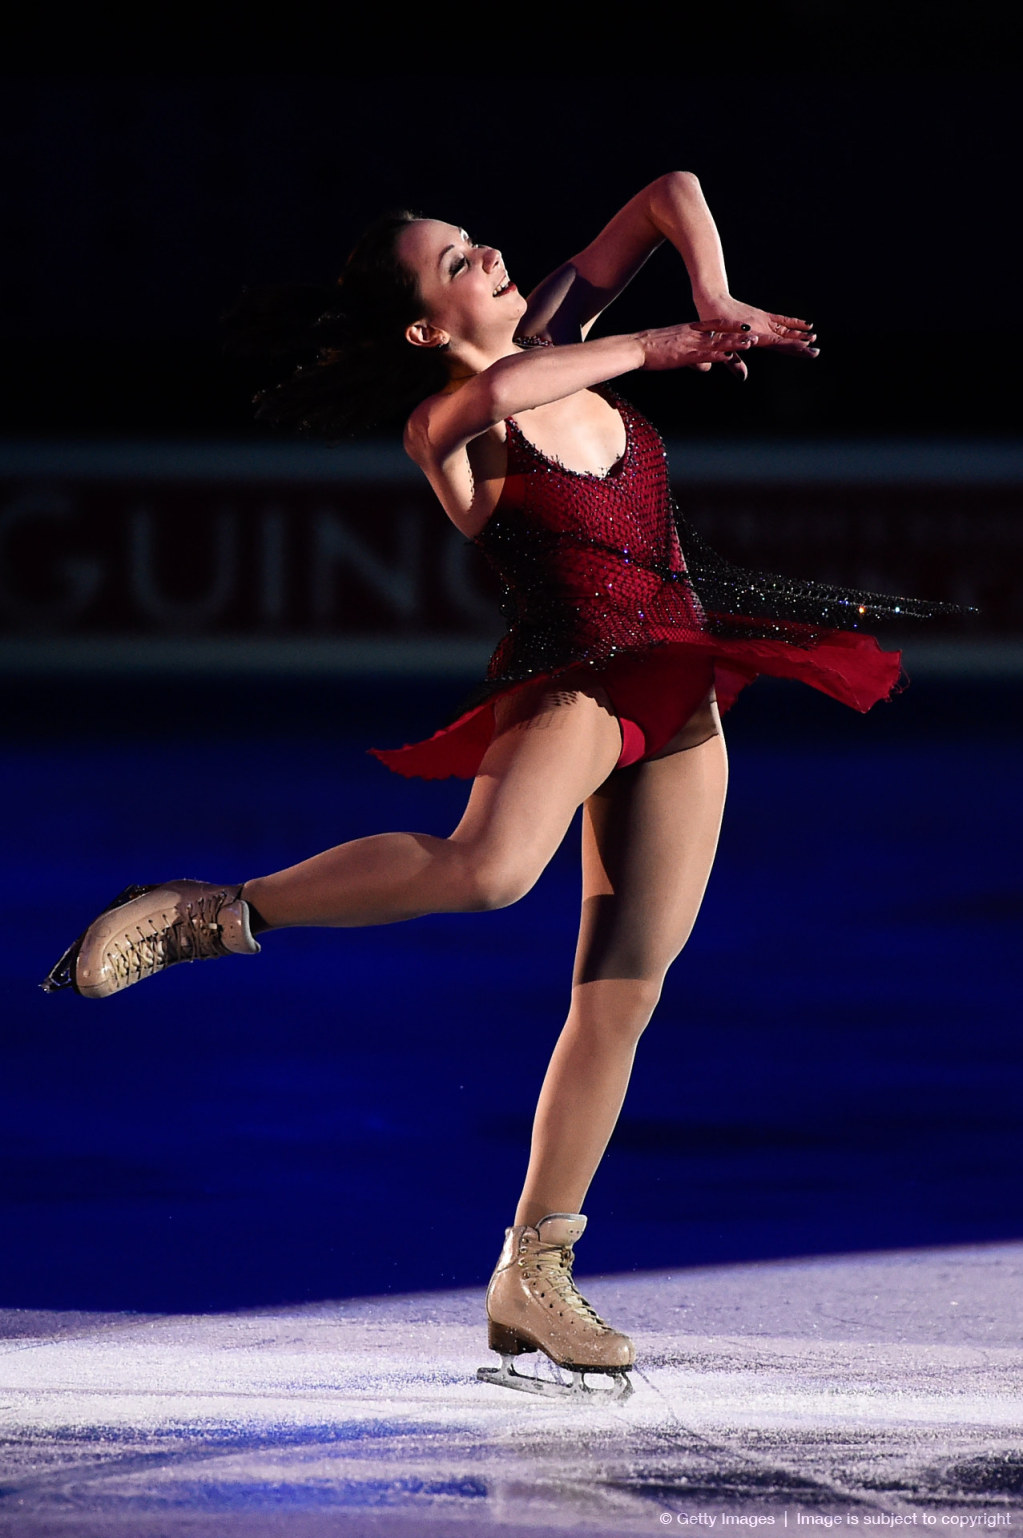 ISU Grand Prix of Figure Skating Final 2014/2015 — Day Four